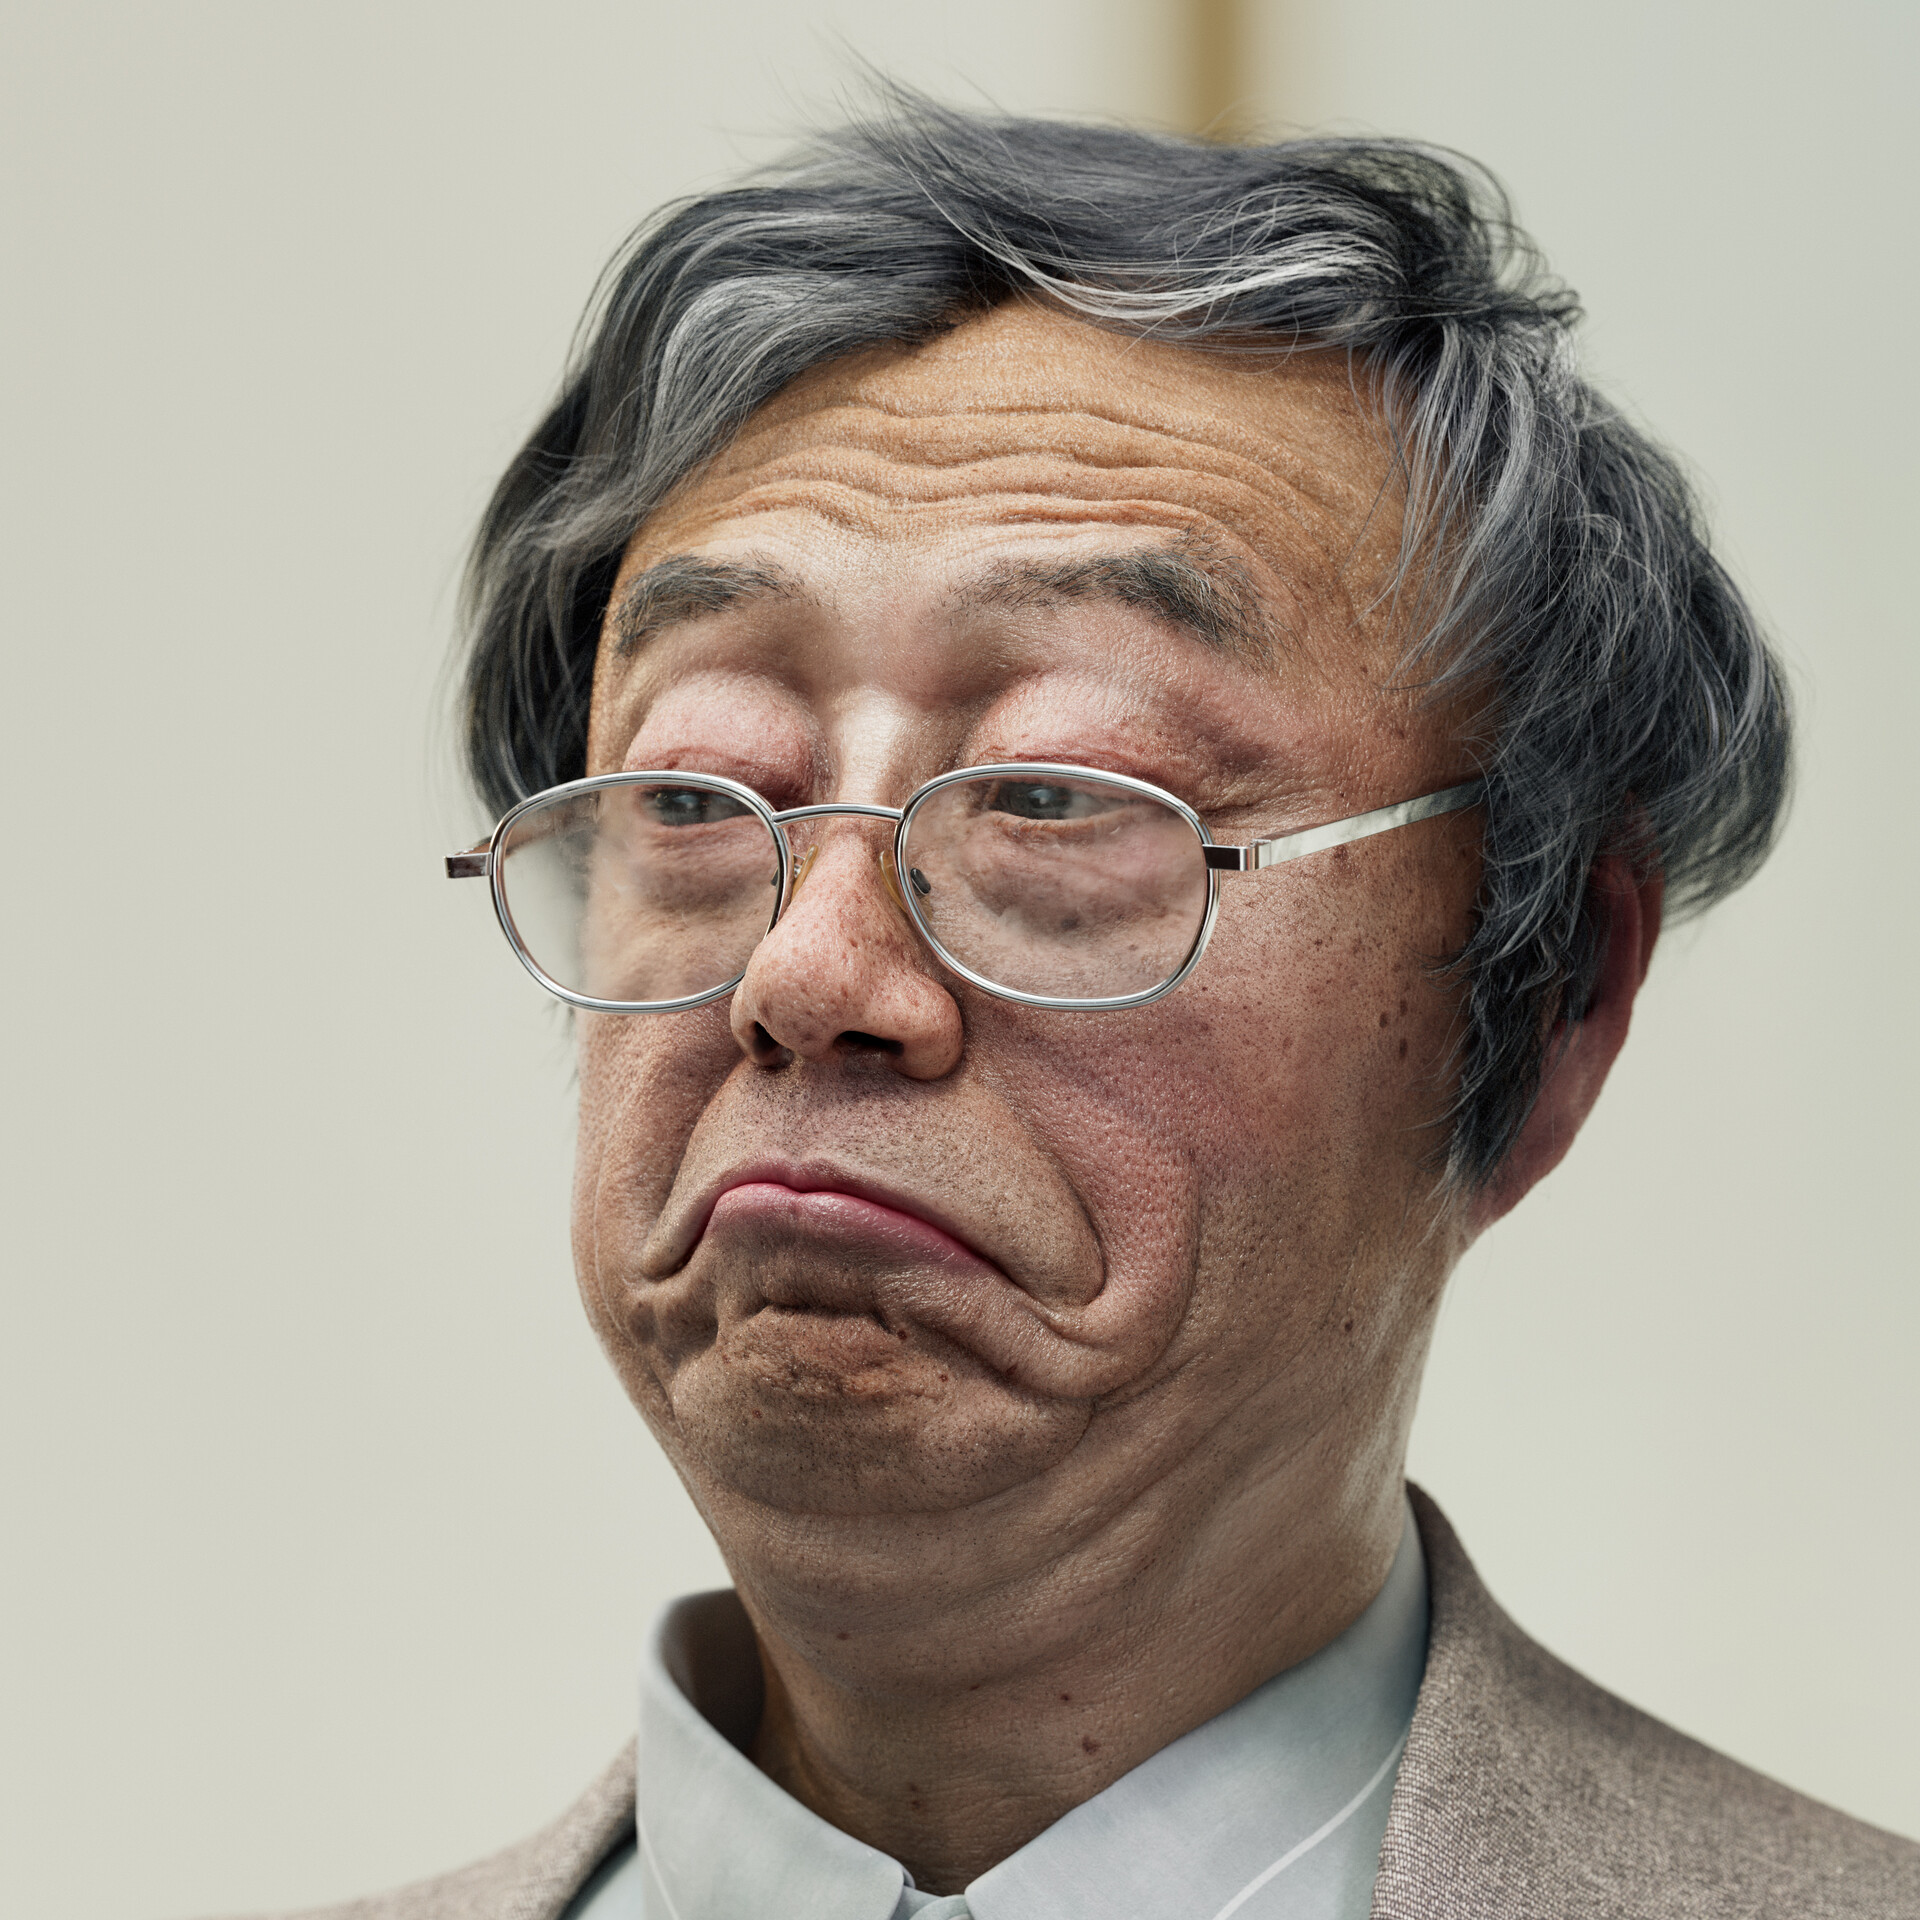 Artstation - The Face Of Bitcoin - Satoshi Nakamoto Portrait